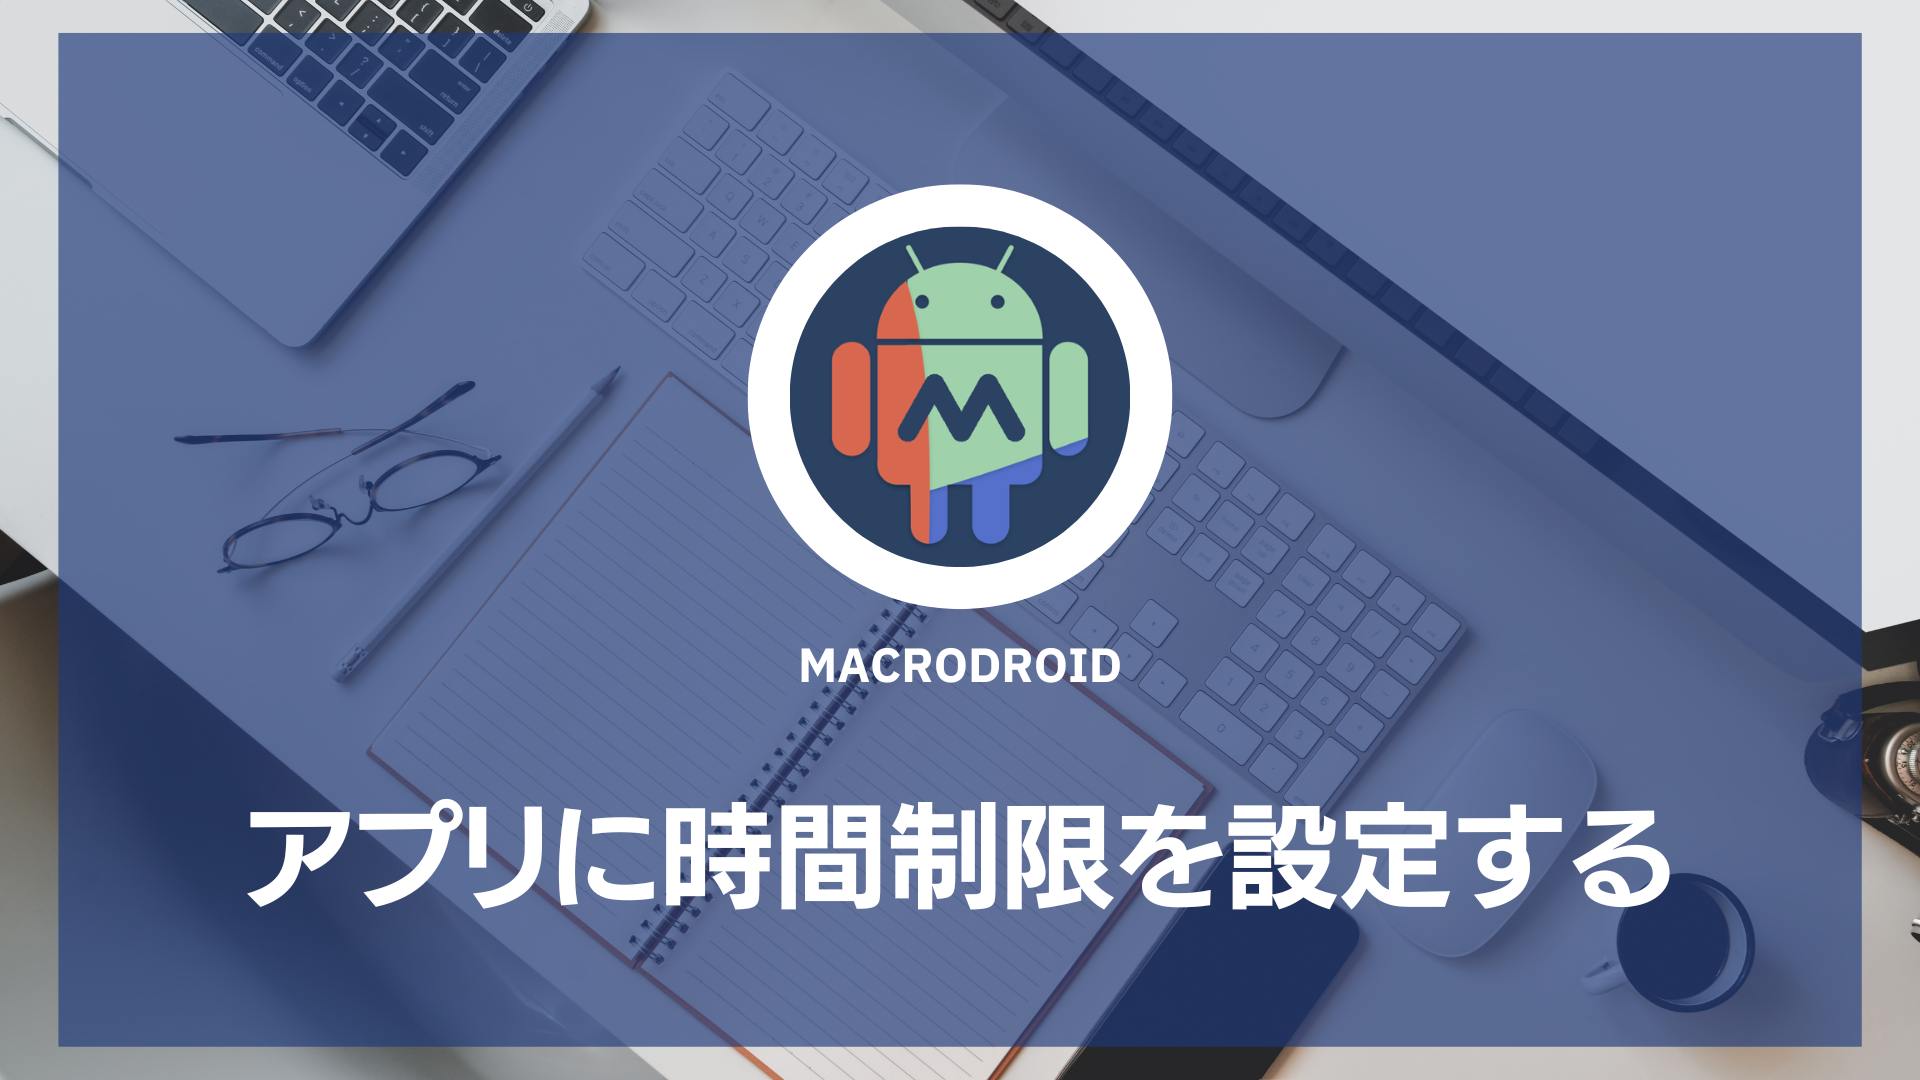 MacroDroid-アプリ使用時間制限マクロ-アイキャッチ